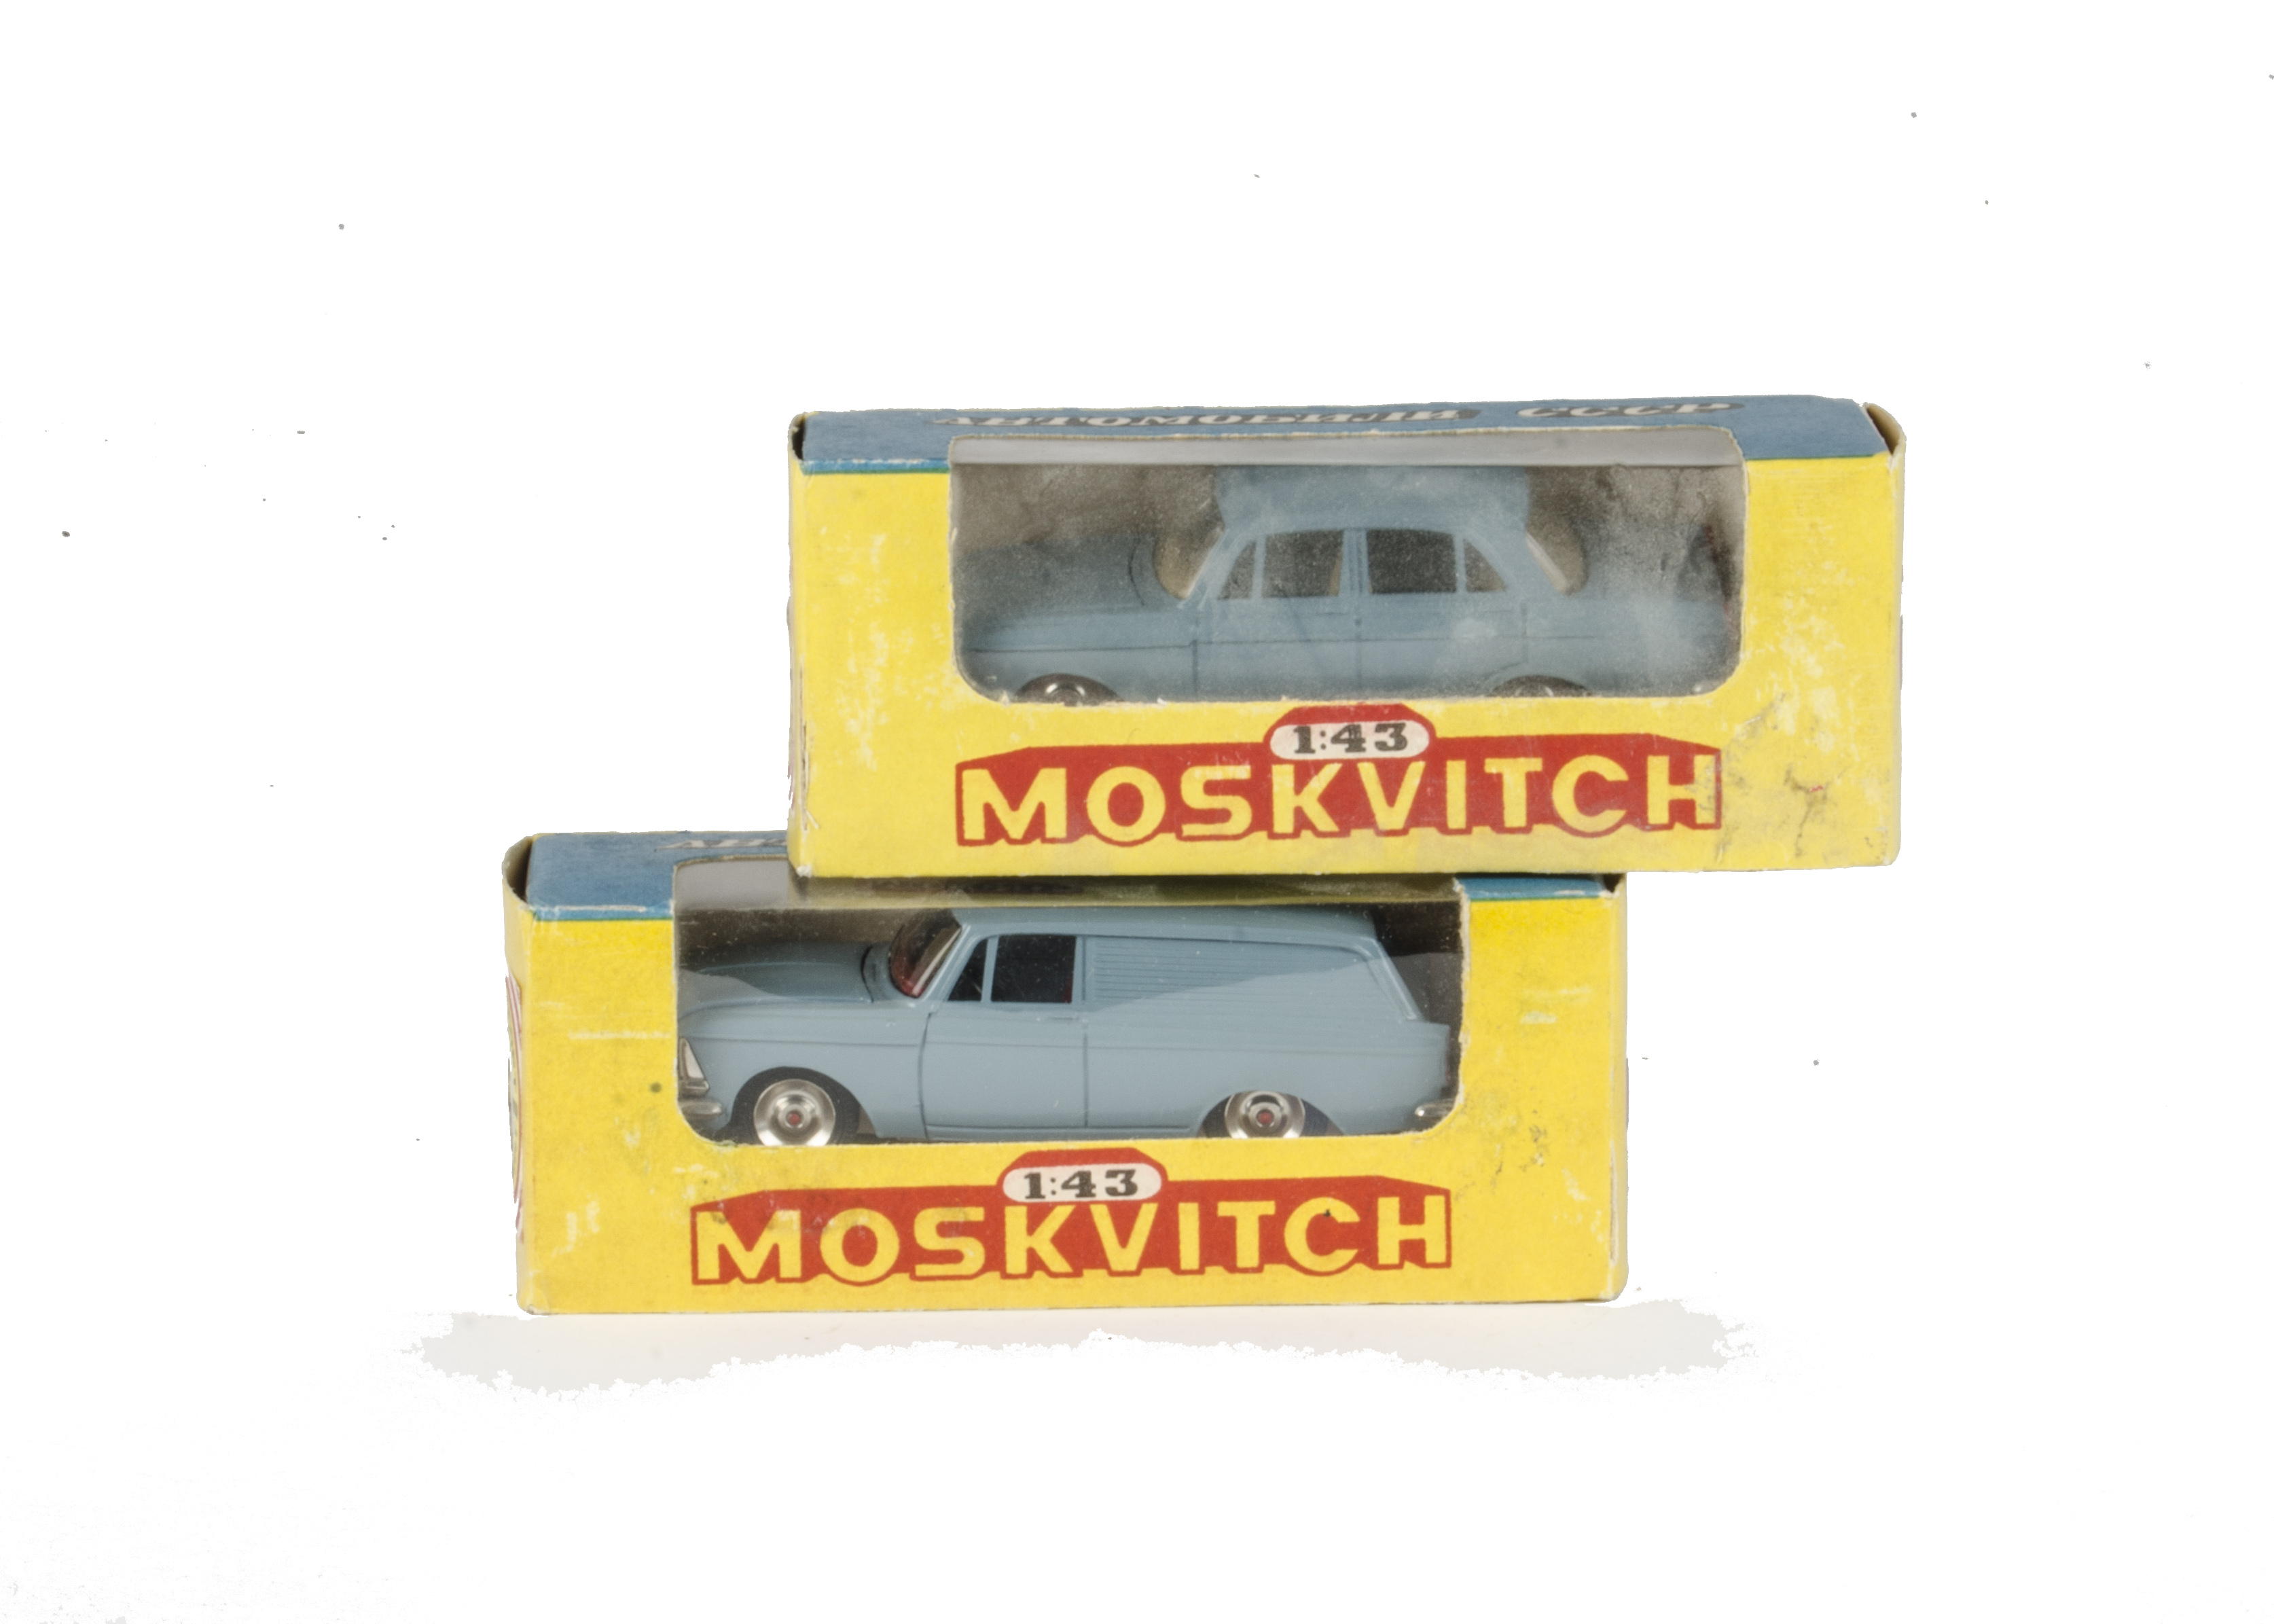 Novo Export 1:43 Moskvitch 433 & 408, both pale blue body, spun hubs, in original window boxes, E,